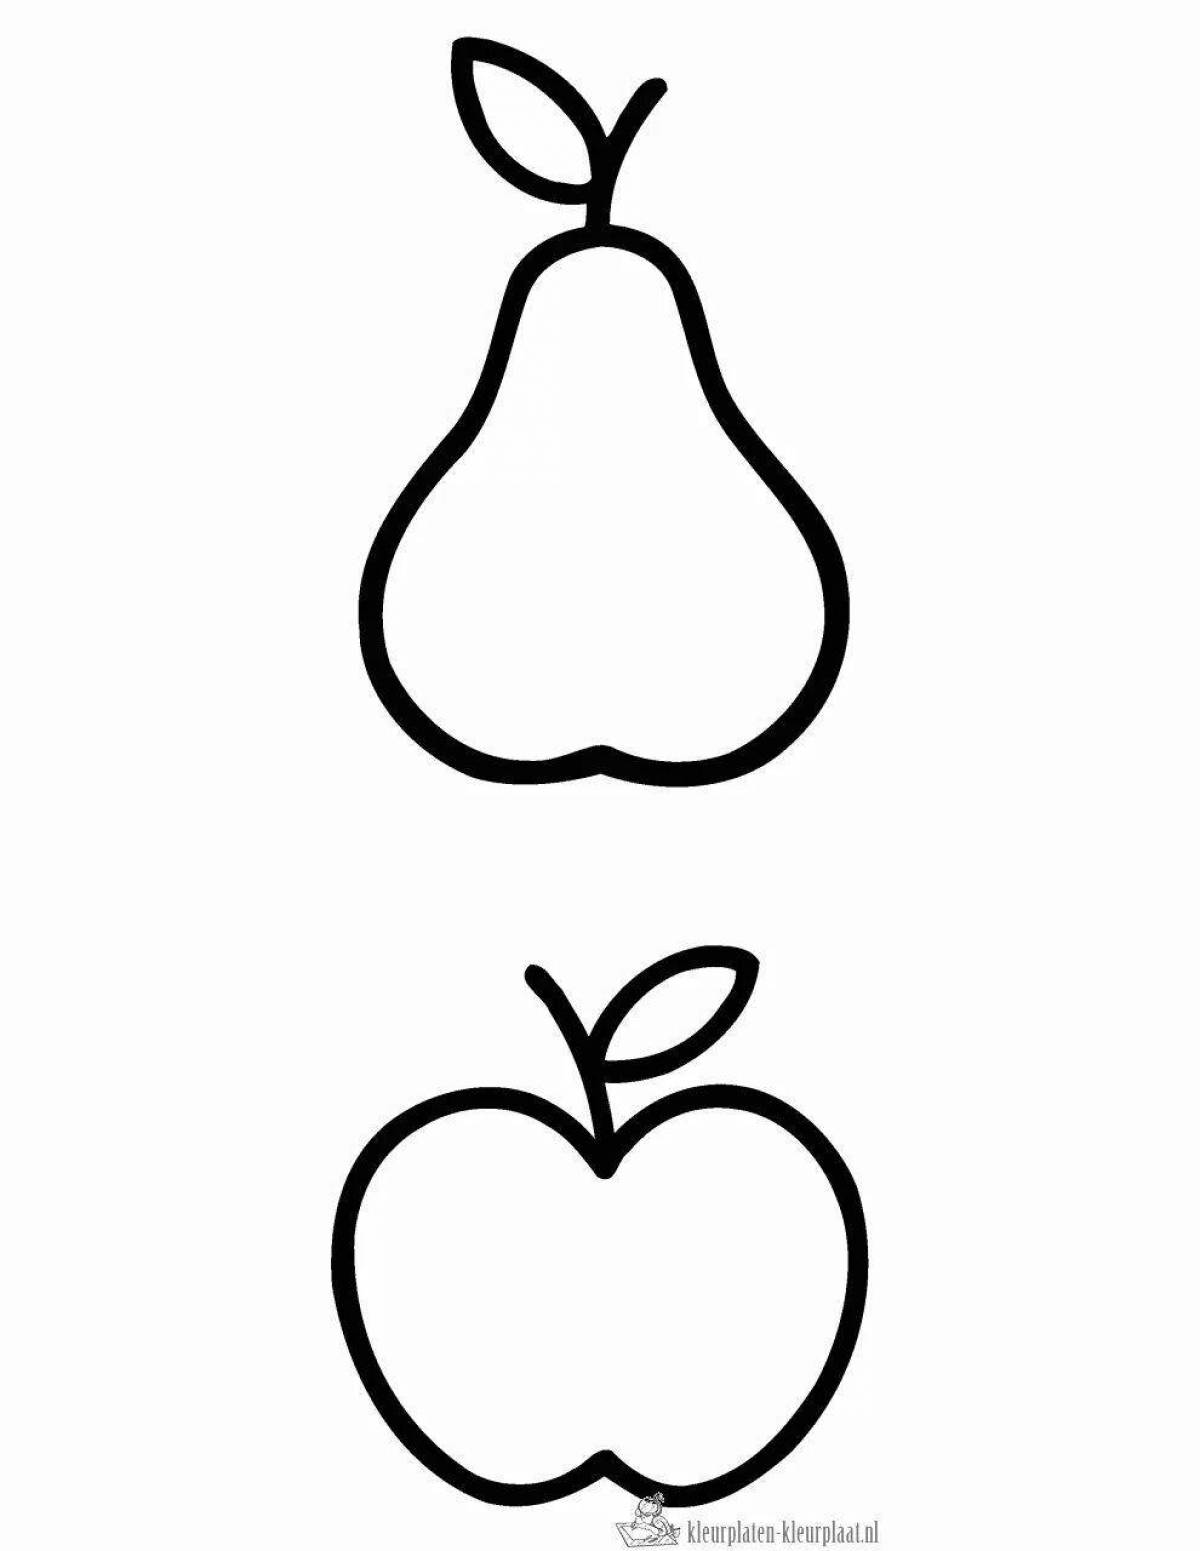 Coloring book festive apple pear